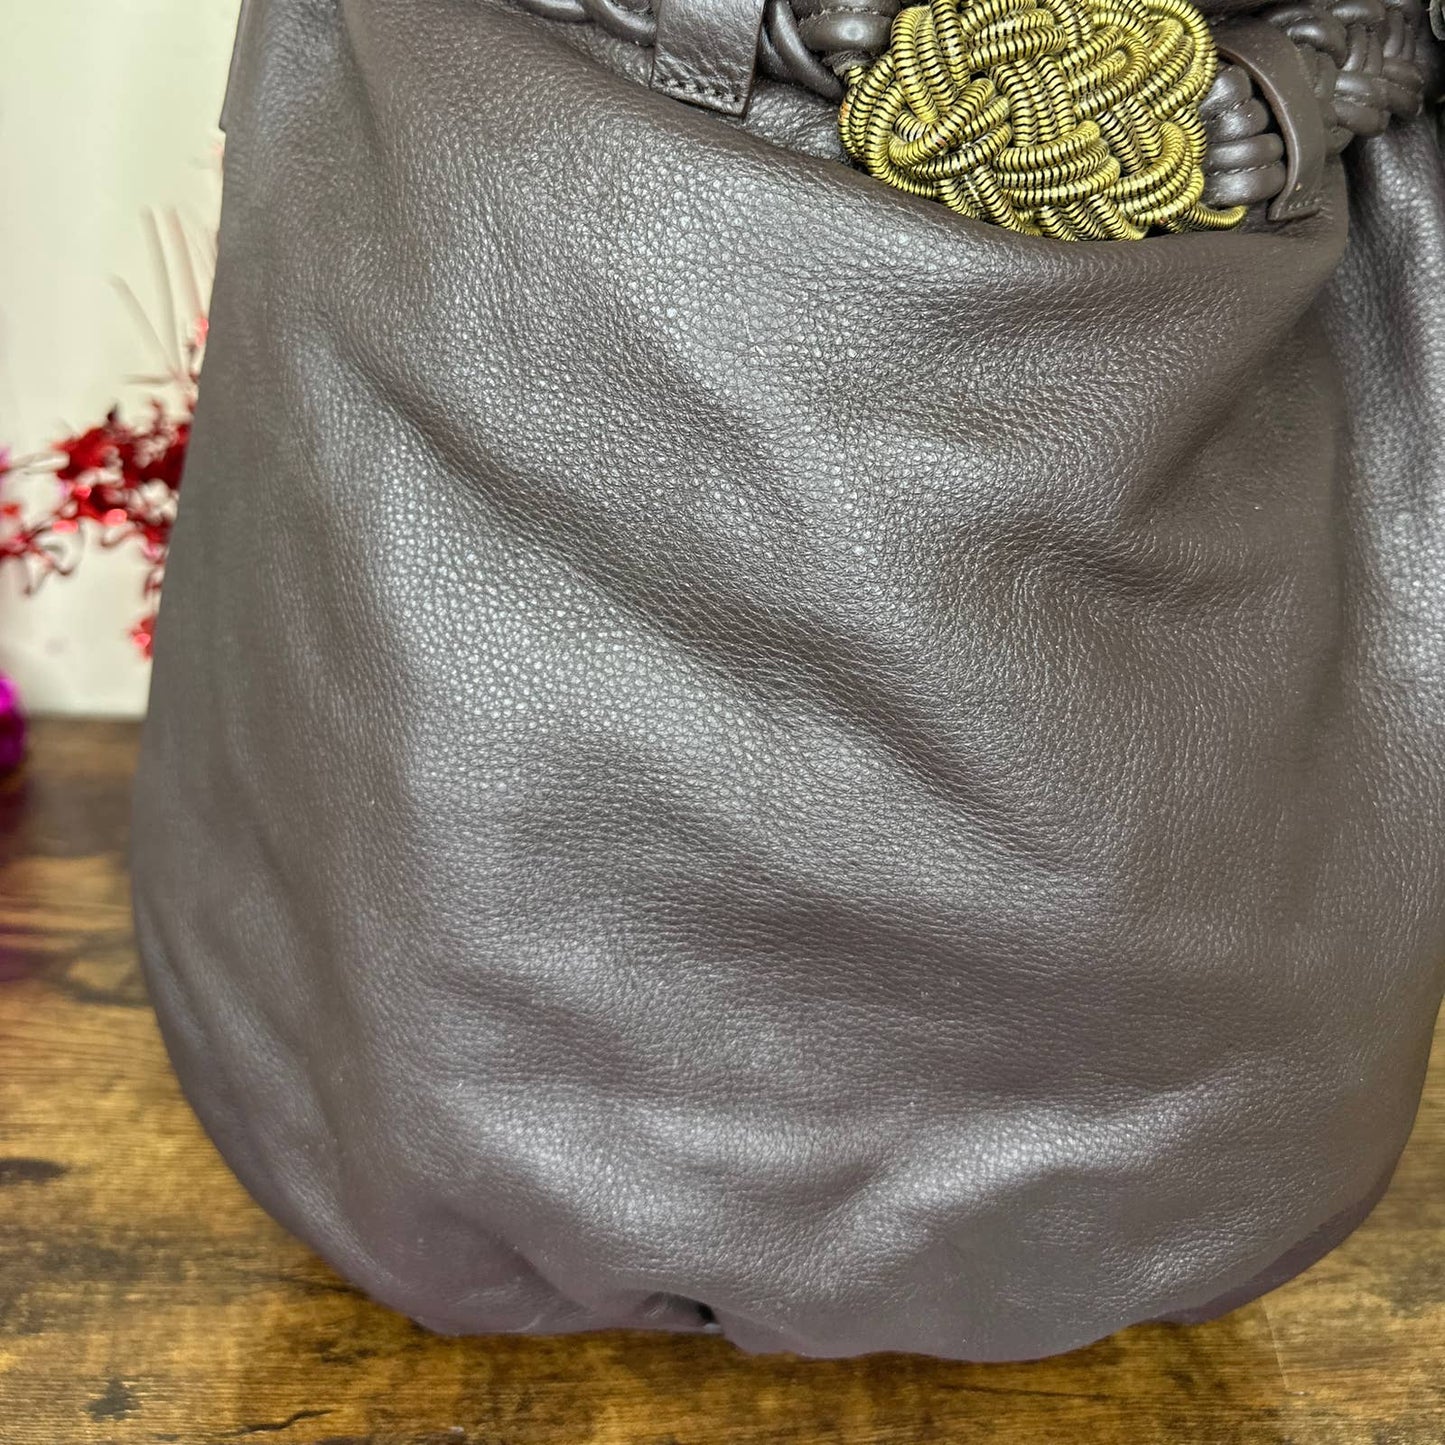 AQUA MADONNA Brown Bucket Style Handbag